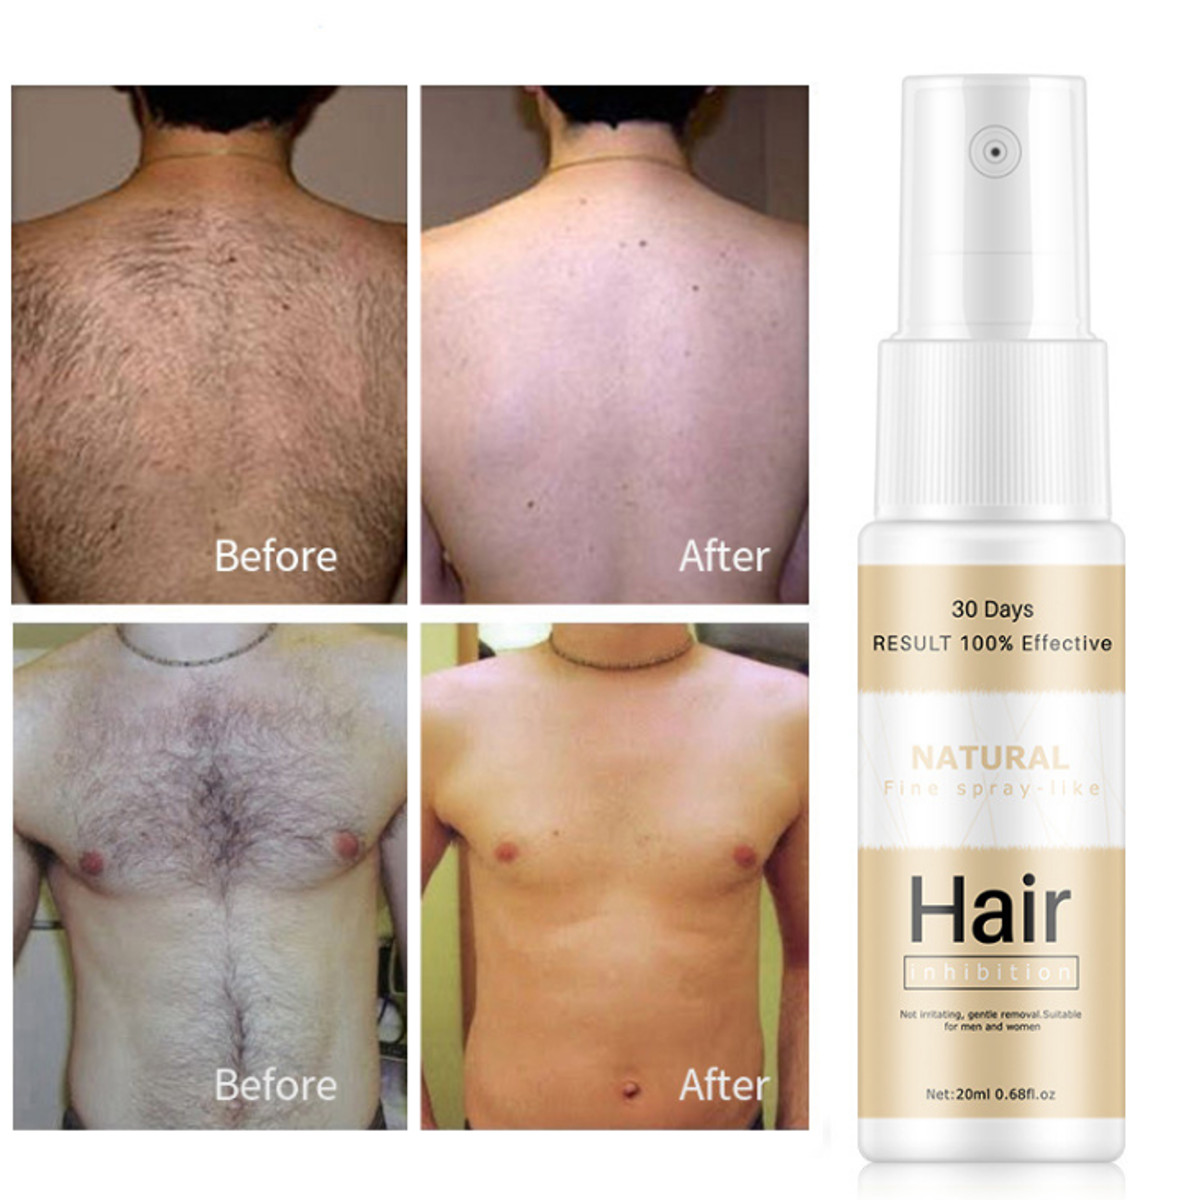 20ml-Permanent-Hair-Removal-Sprayer-Reject-Hair-Regeneration-Hair-Growth-Inhibitor-1662323-5